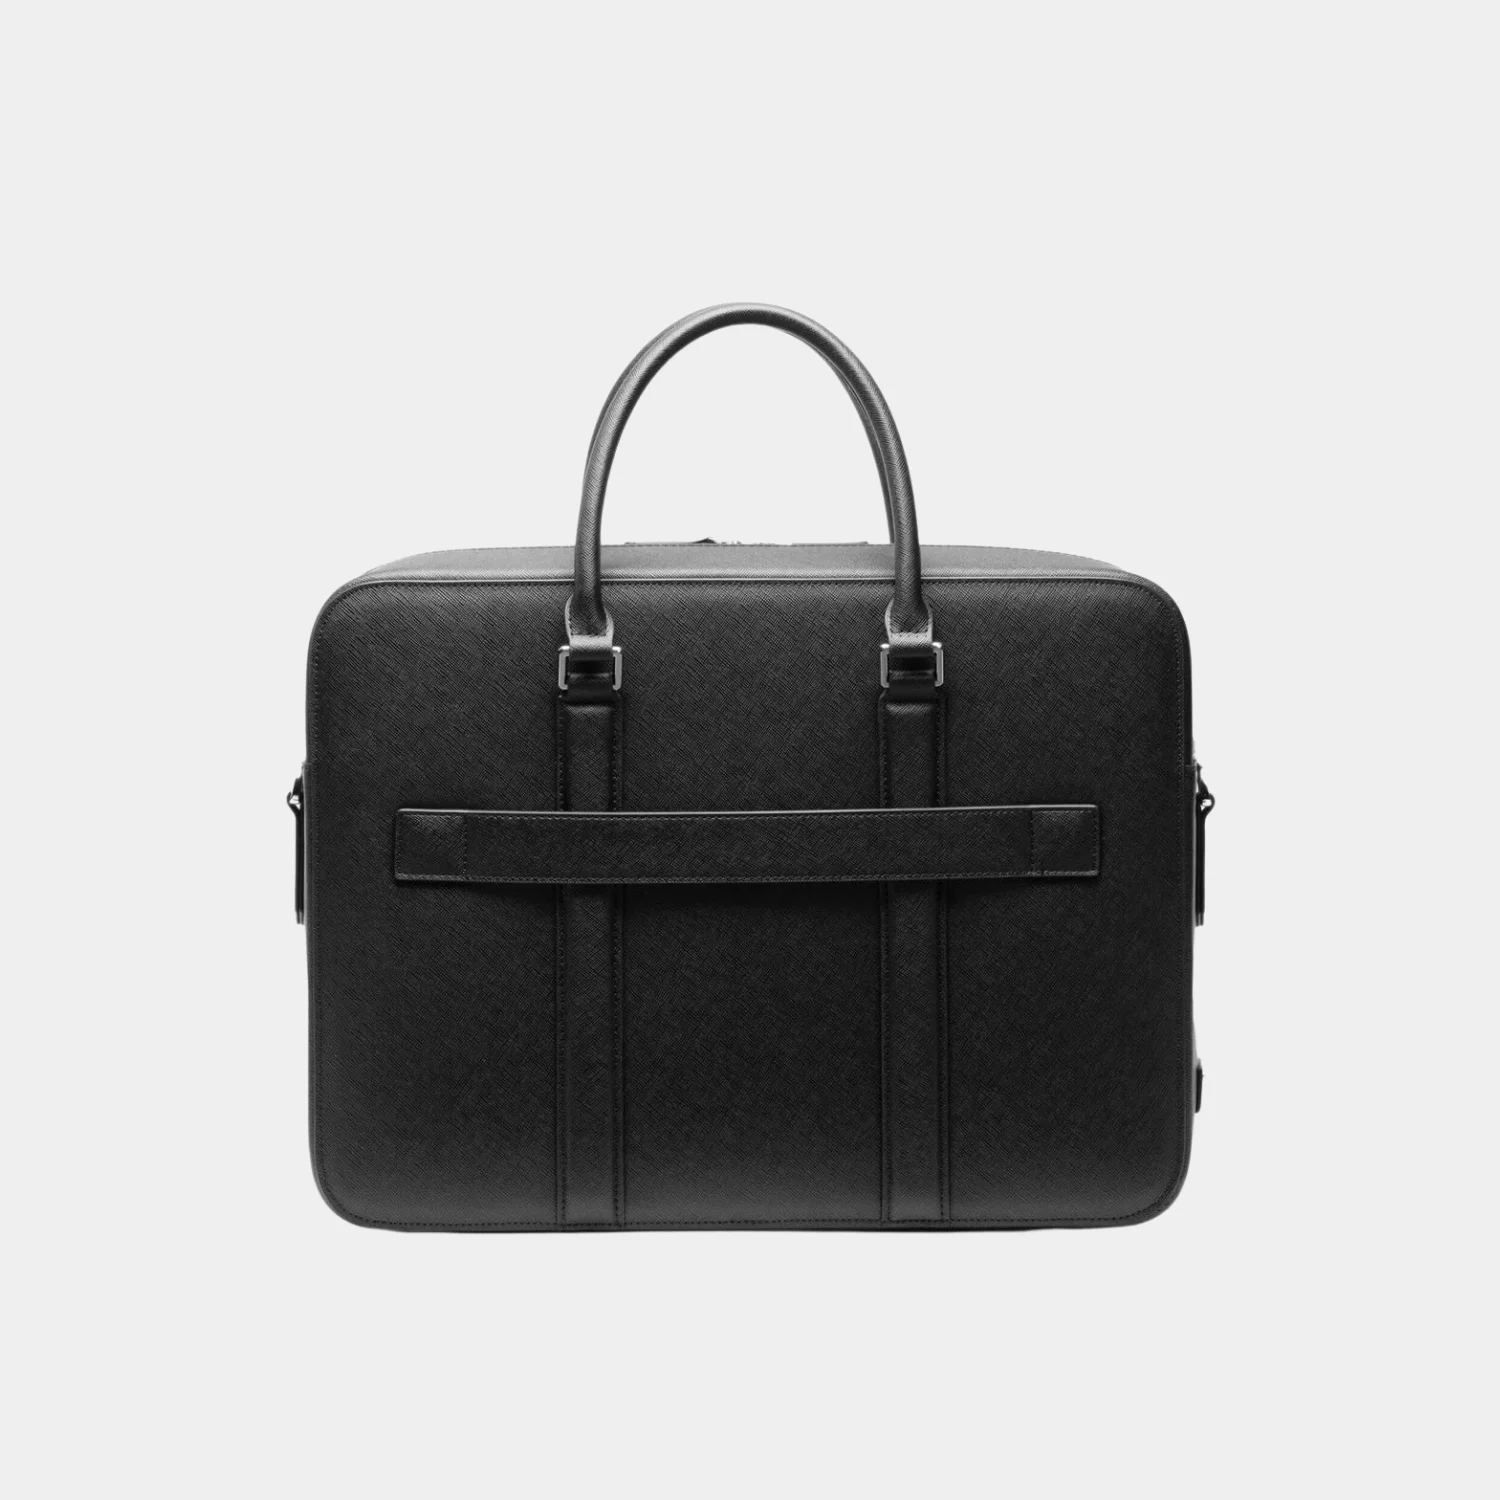 Buy Classy Black Leather Double-Zip Laptop Briefcase Bag